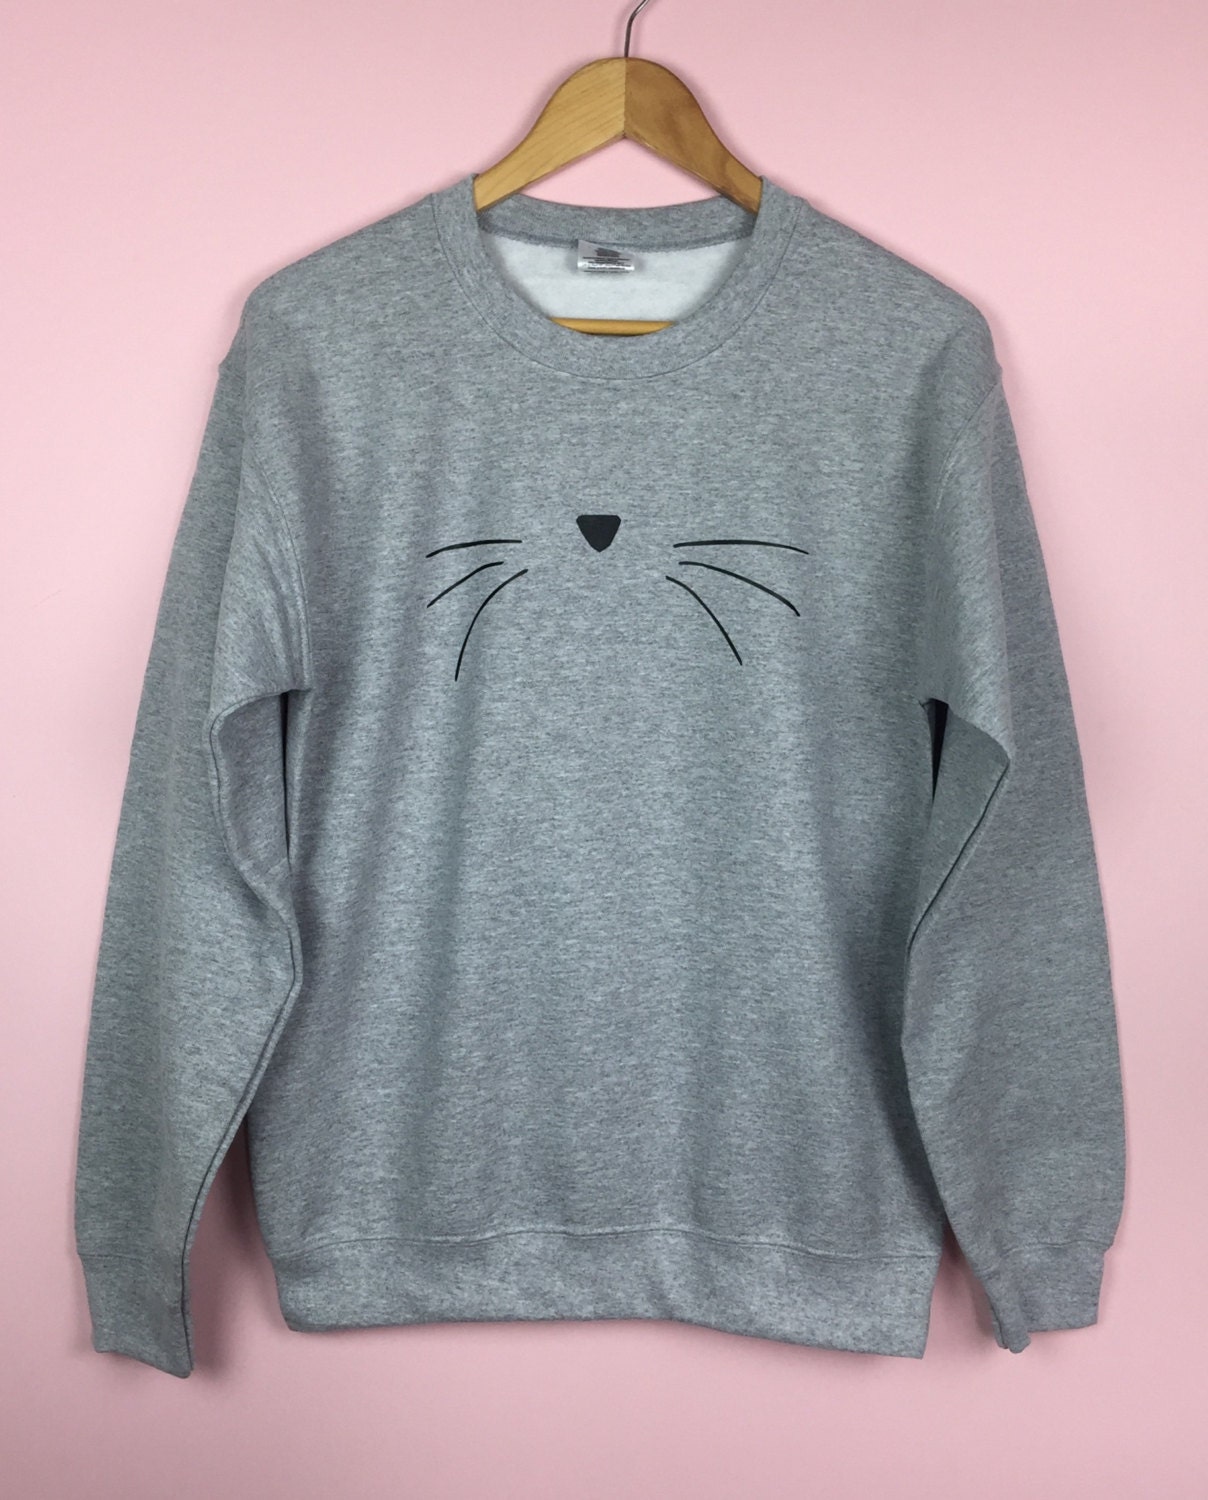 Cat face shirt. Cat Sweatshirt. Cat lover gift. Cat face